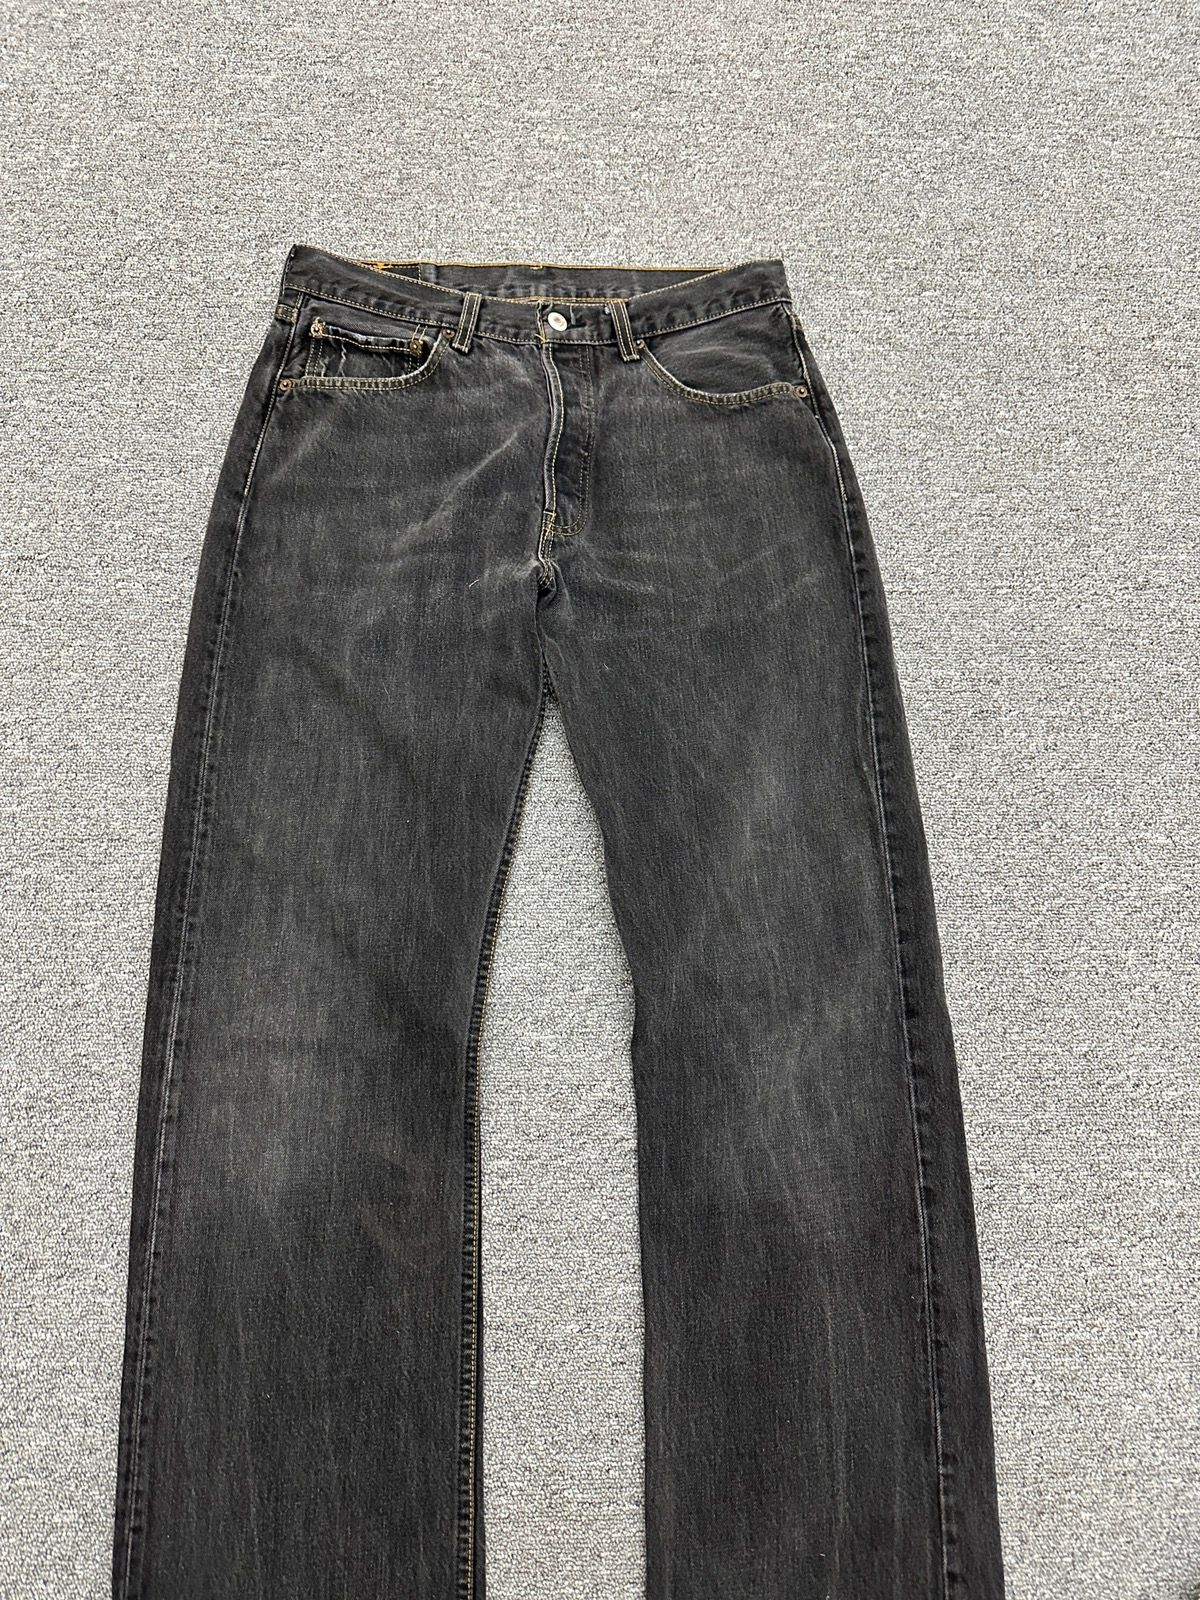 Vintage Vintage 501 Levi’s Faded Black Denim Pants Size US 32 / EU 48 - 7 Thumbnail